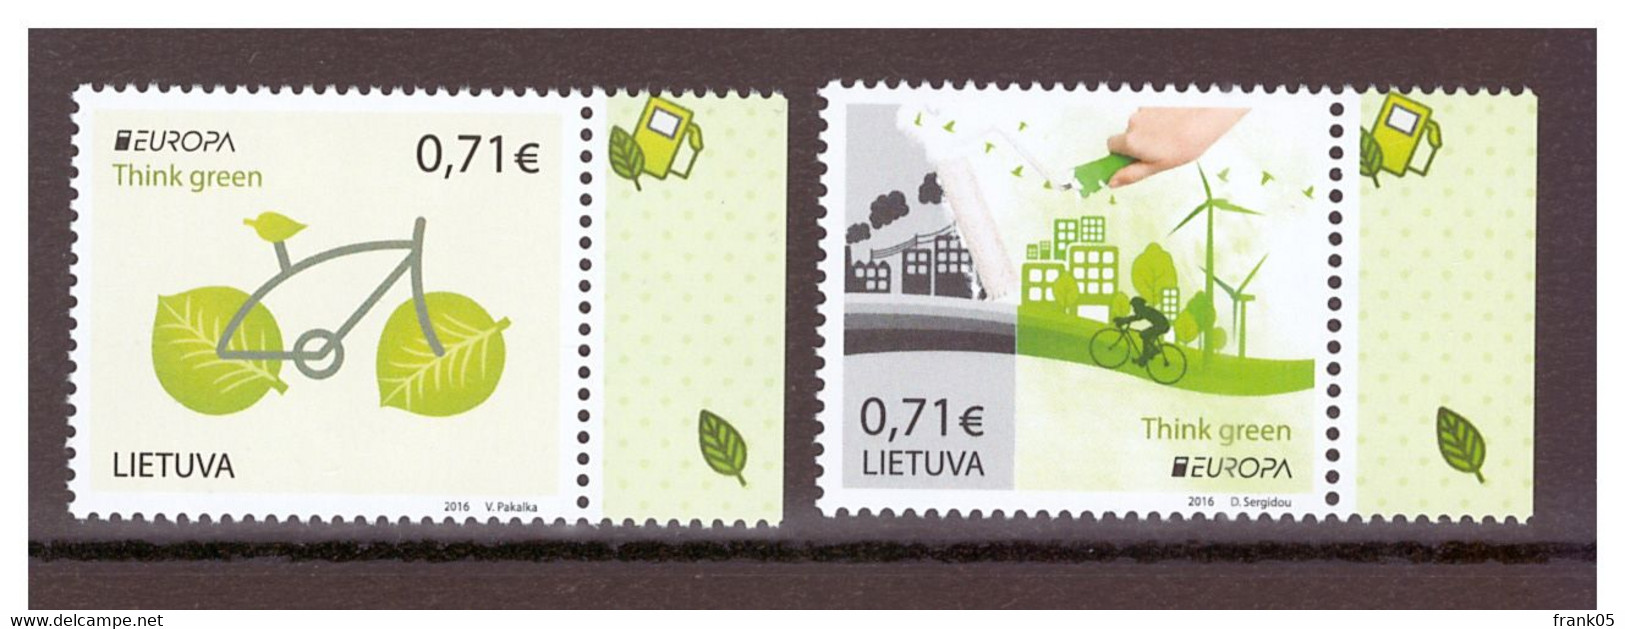 Litauen / Lithuania / Lituanie 2016 Satz/set EUROPA ** - 2016